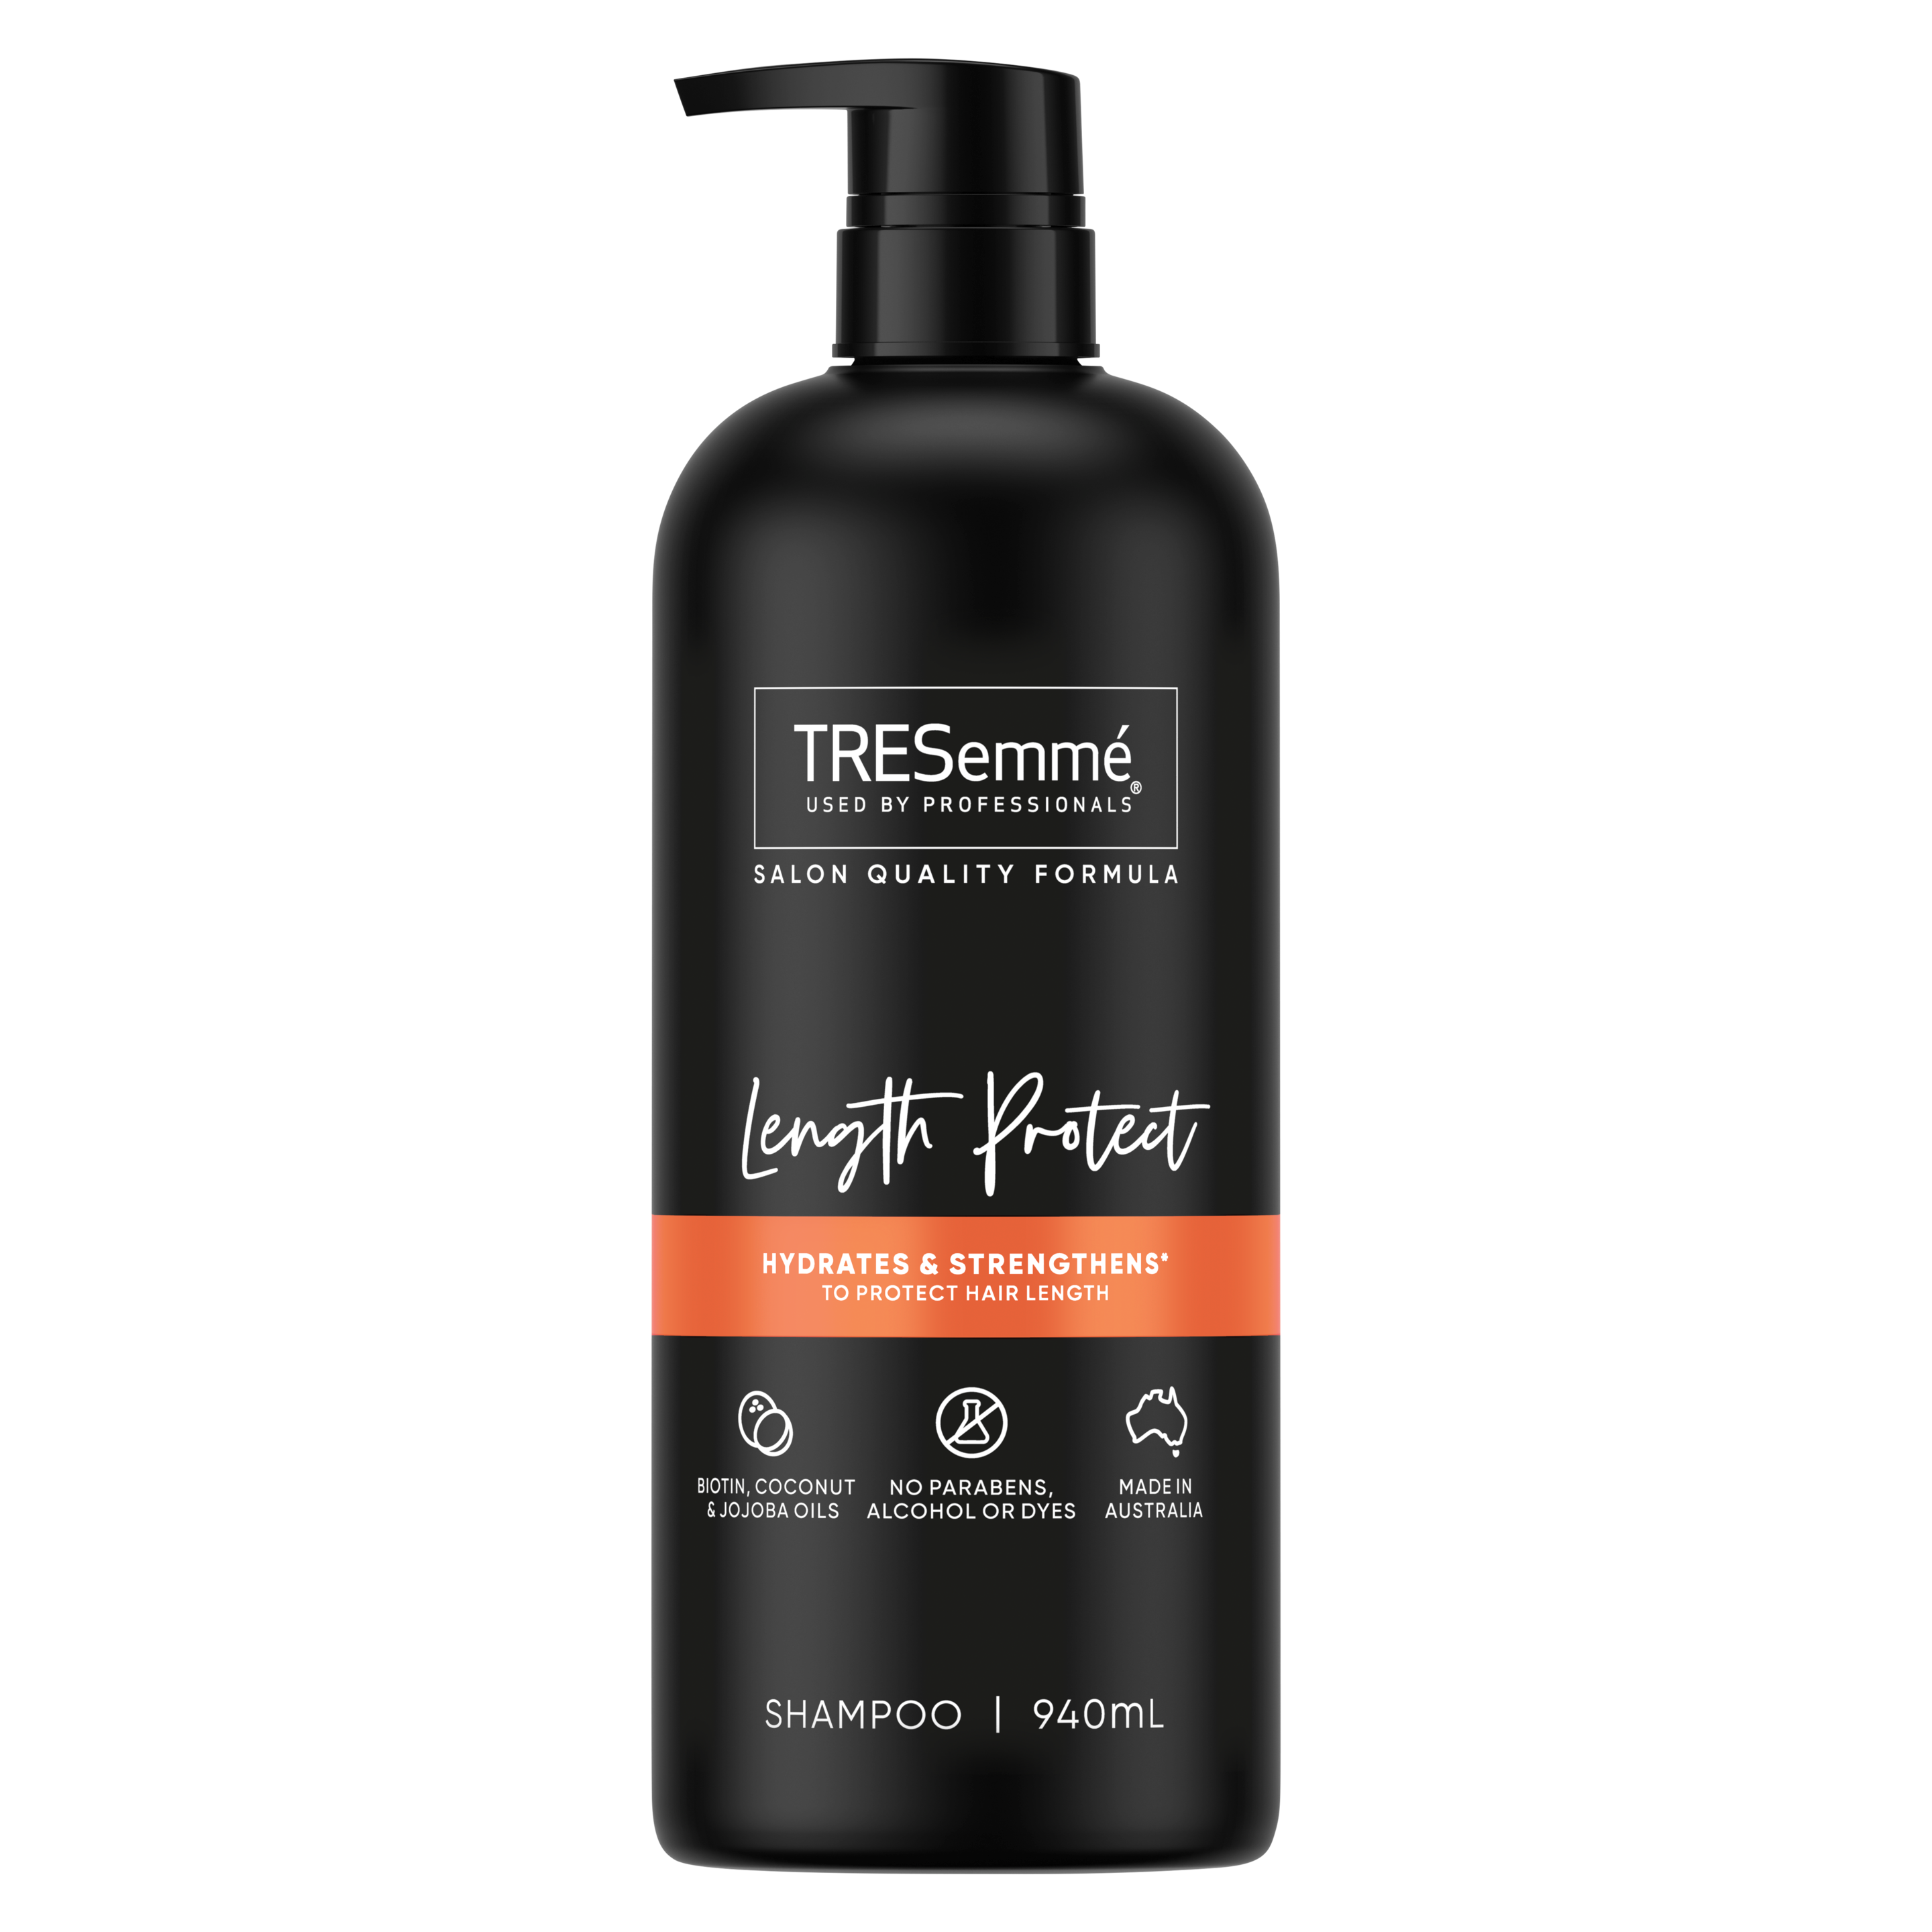 A 940ml bottle of TRESemmé Length Protect Shampoo